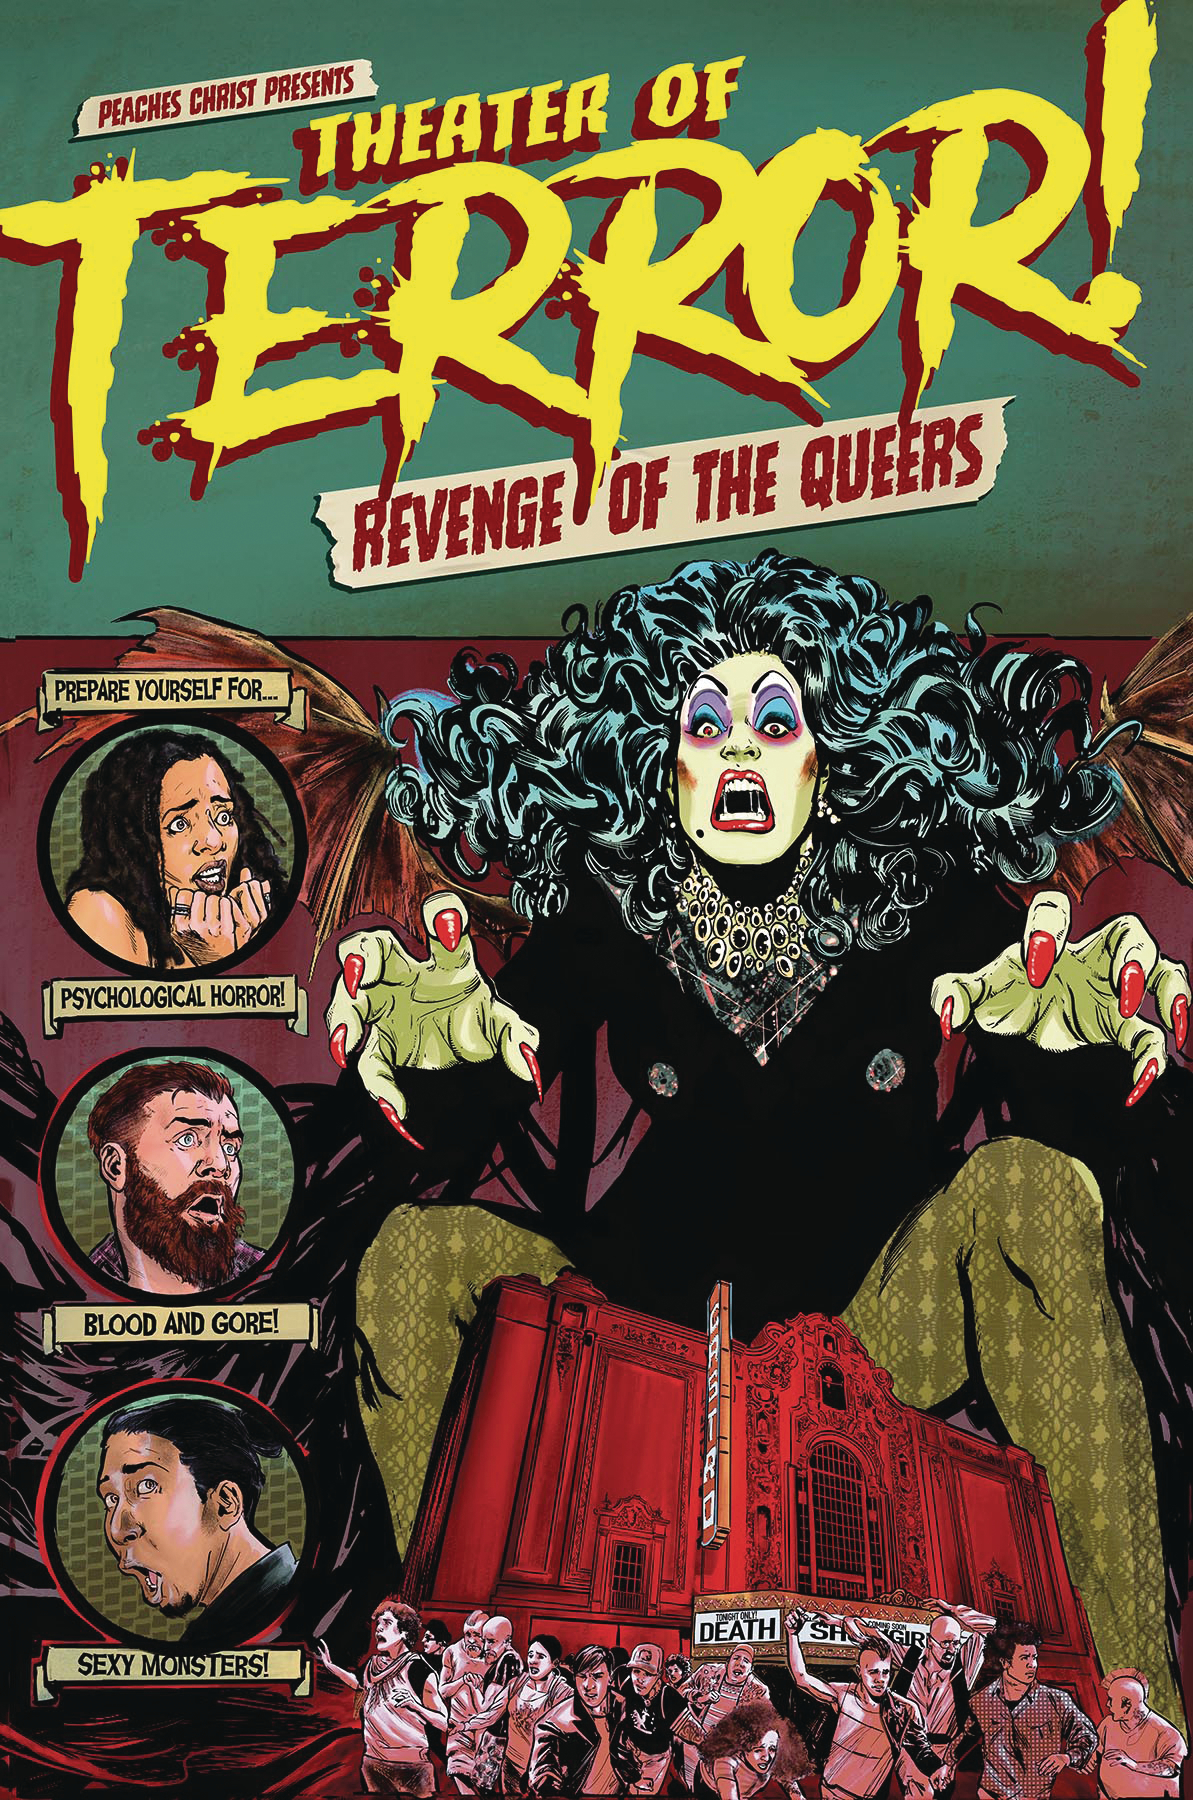 Theatre Of Terror: Revenge Of The Queers s/c